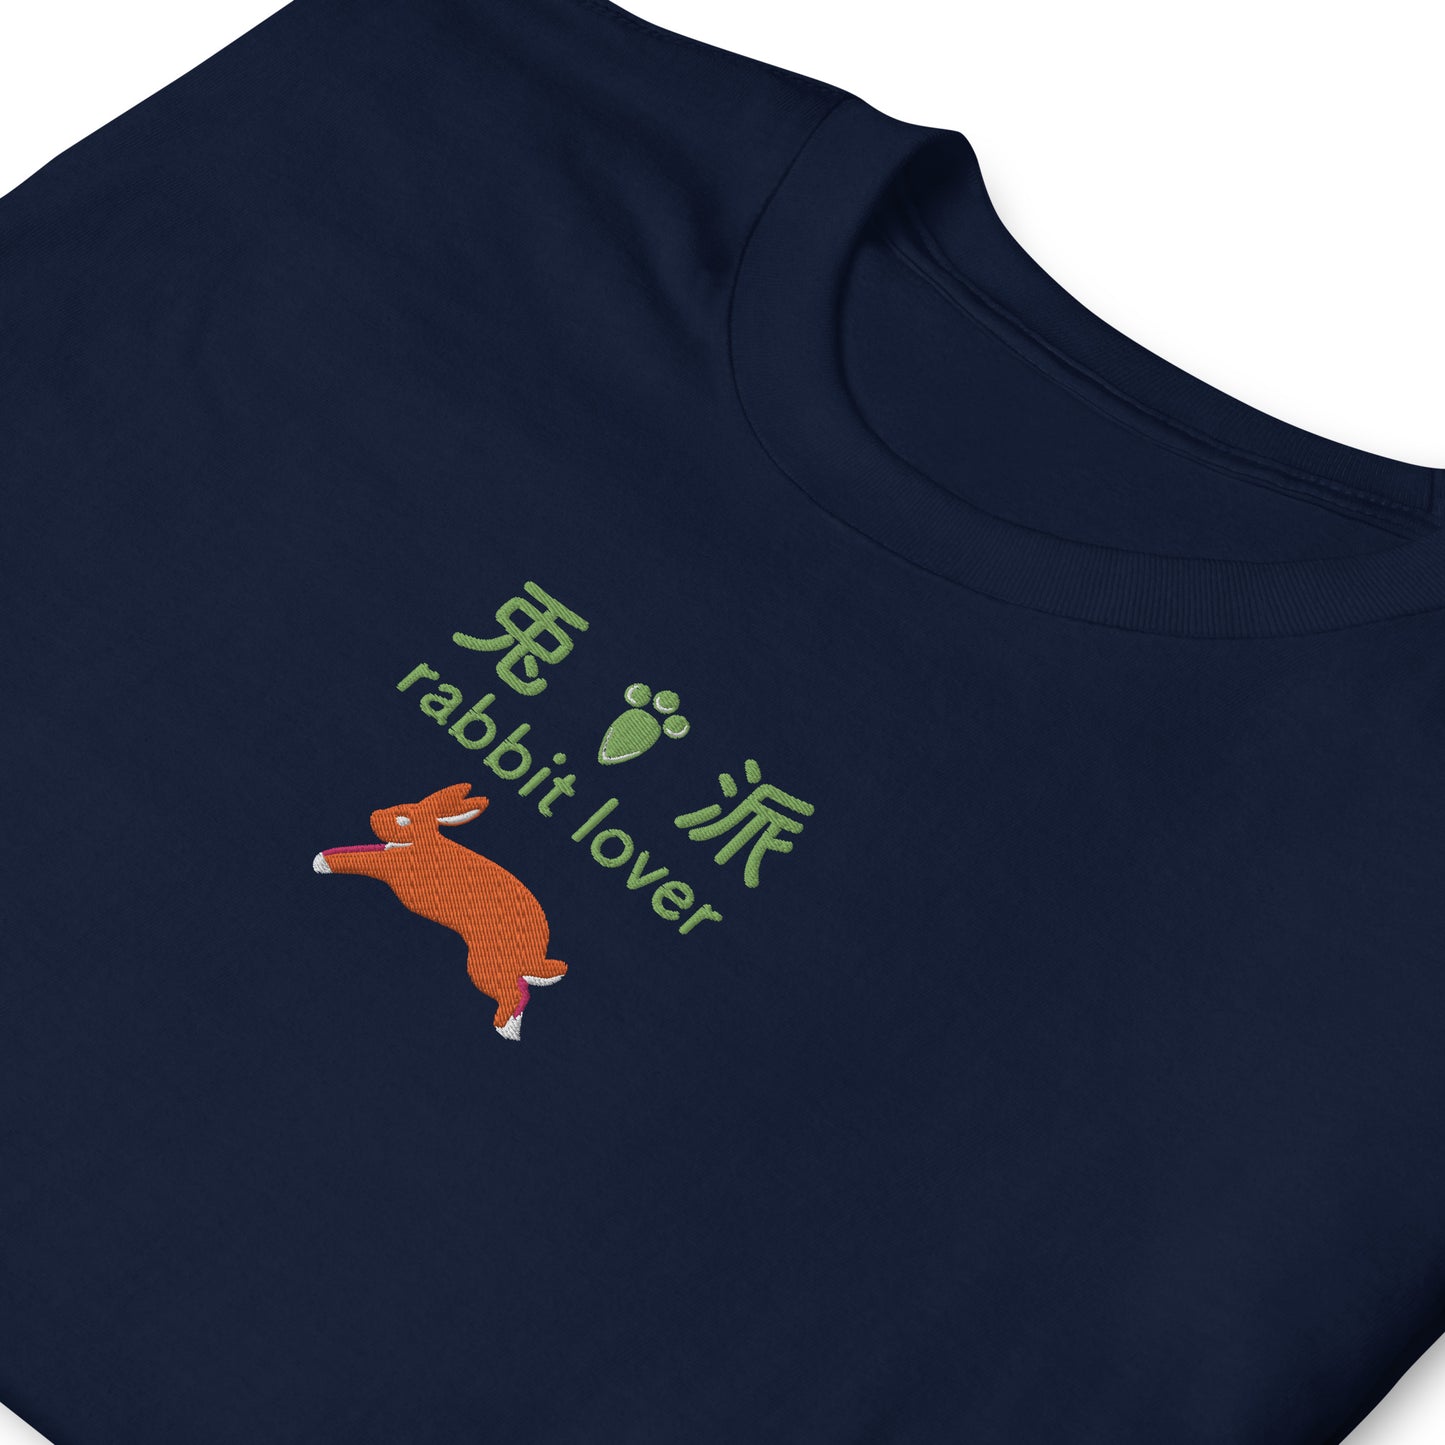 Rabbit Lover Japanese & Chinese - Embroidery Unisex T-Shirt 100% Cotton- UNIWARI